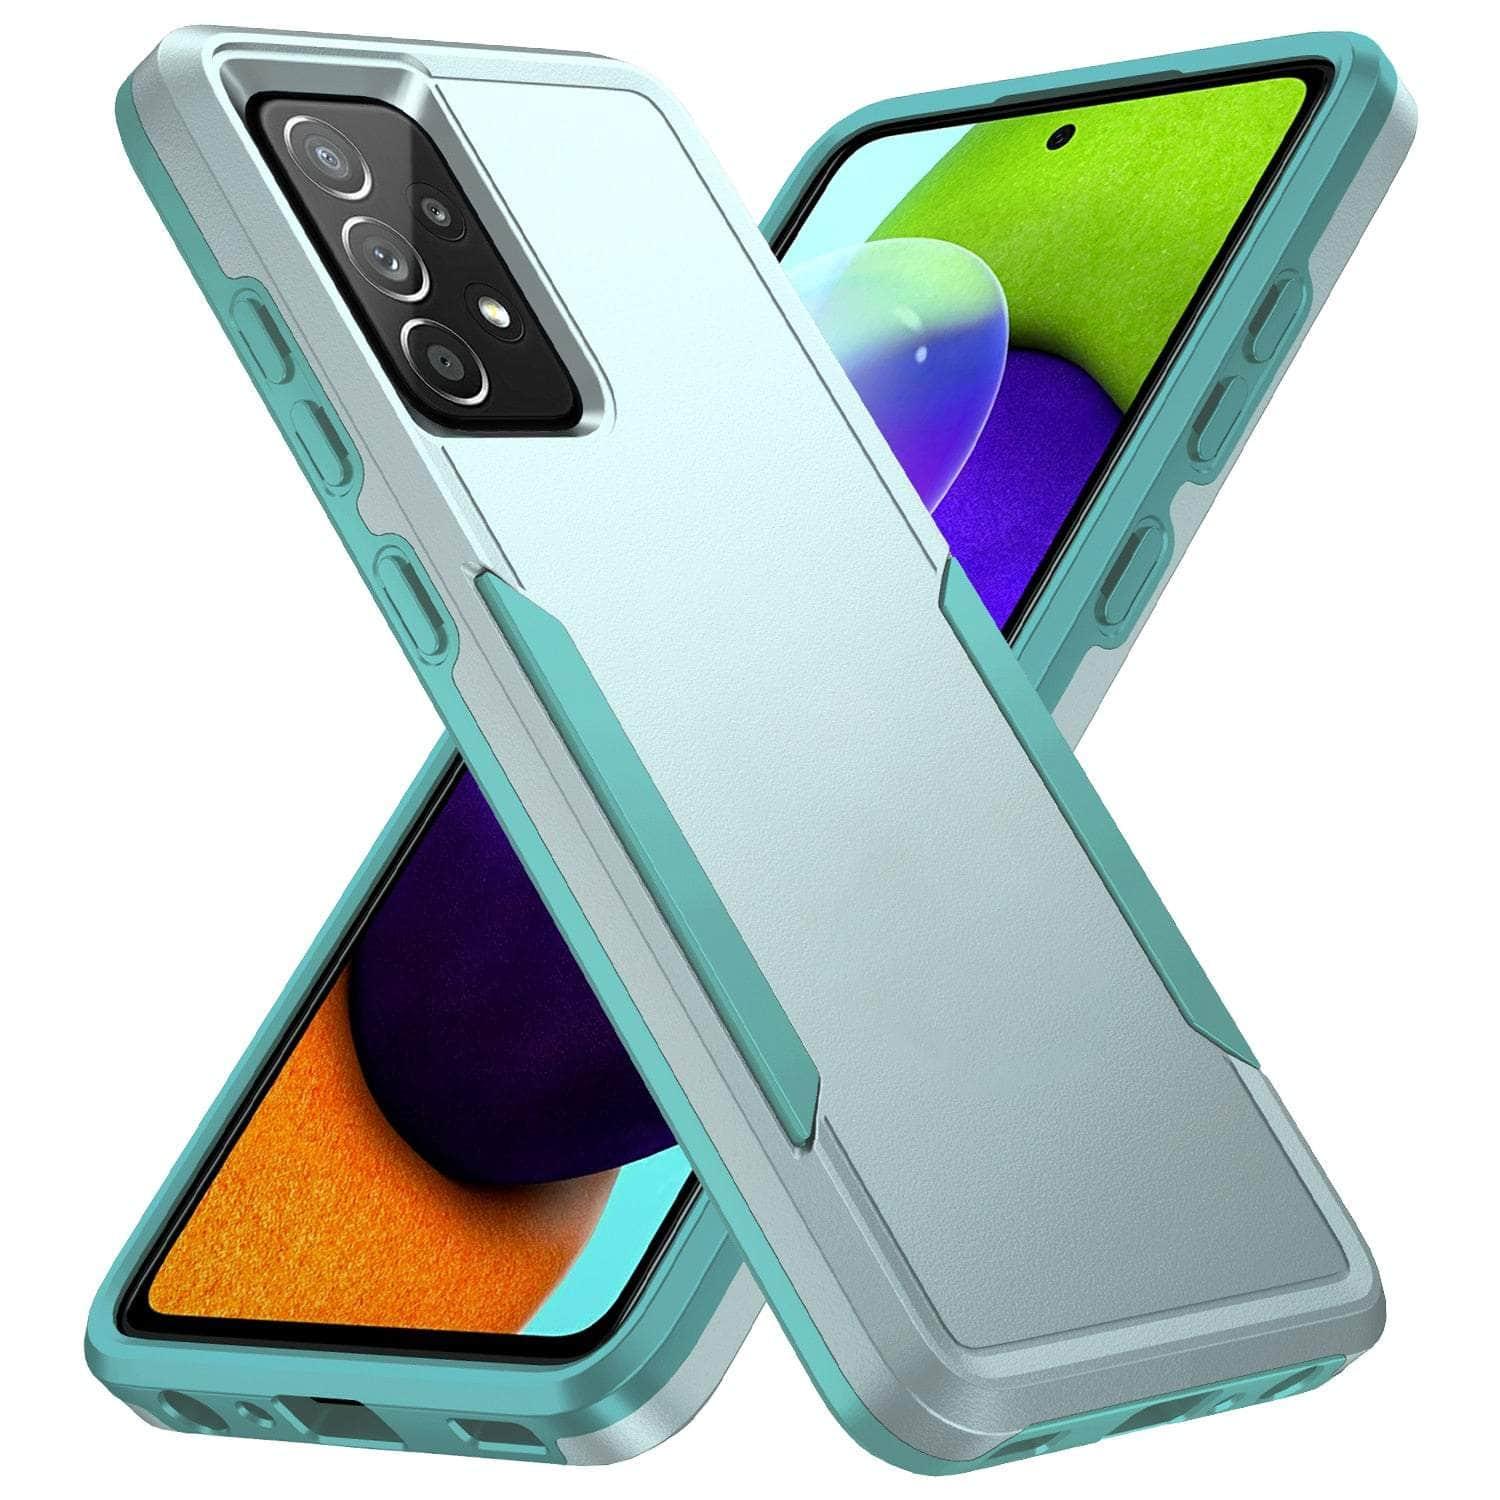 Casebuddy green / for Samsung A73 5G Shockproof Precise Cutout Galaxy A73 Case